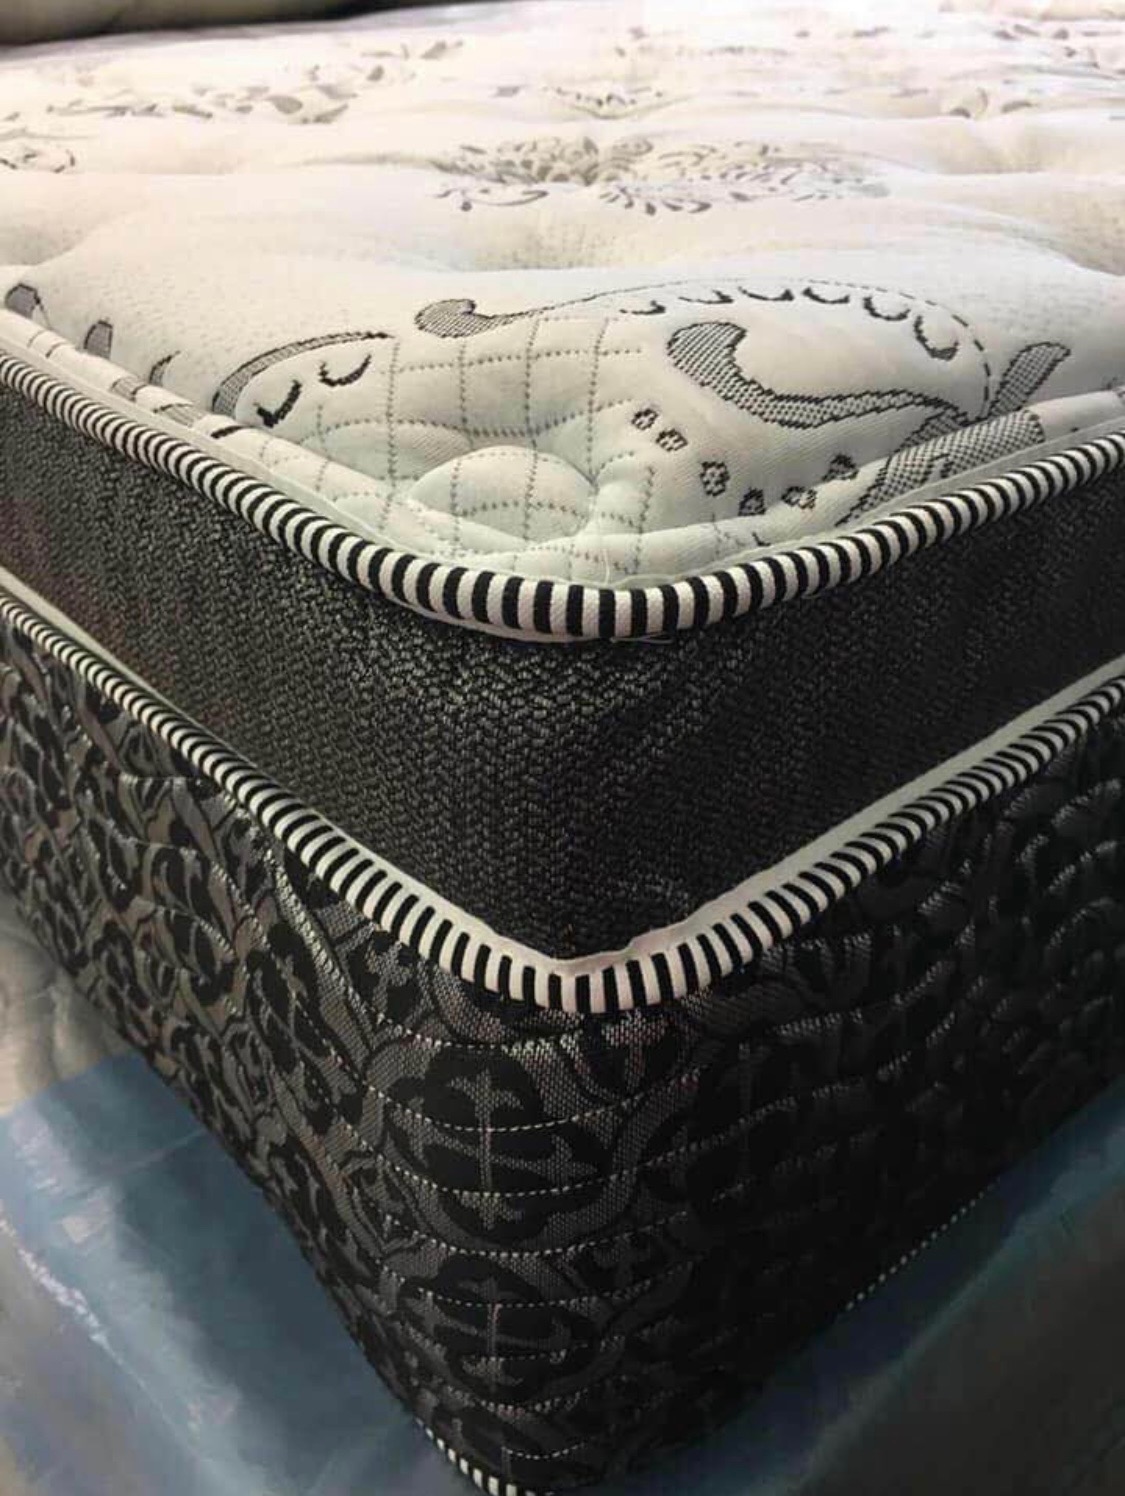 innerspring mattress with black pattern